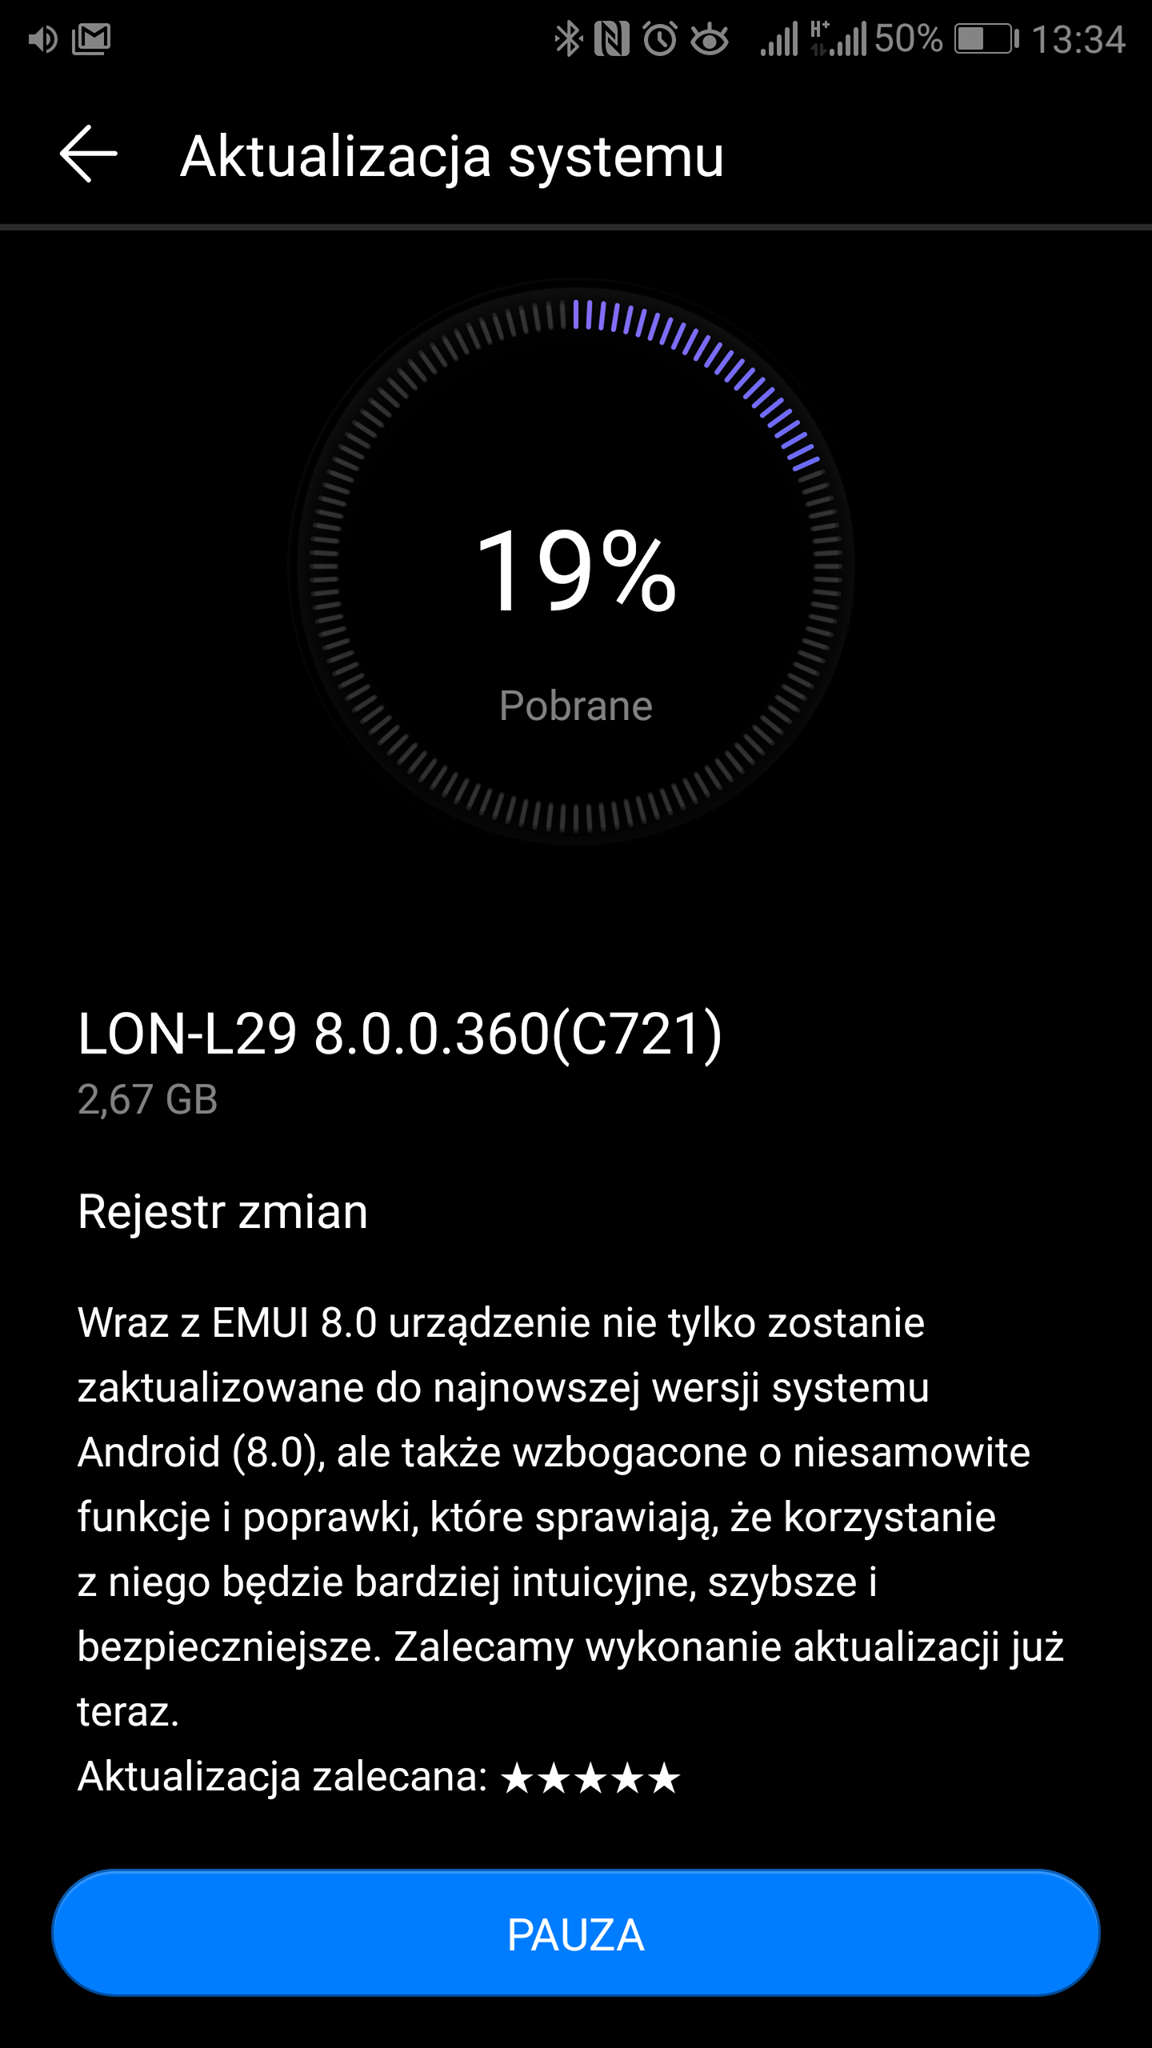 Huawei Mate 9 Pro i Porsche Design w Polsce dostaje aktualizacj do Androida 8.0